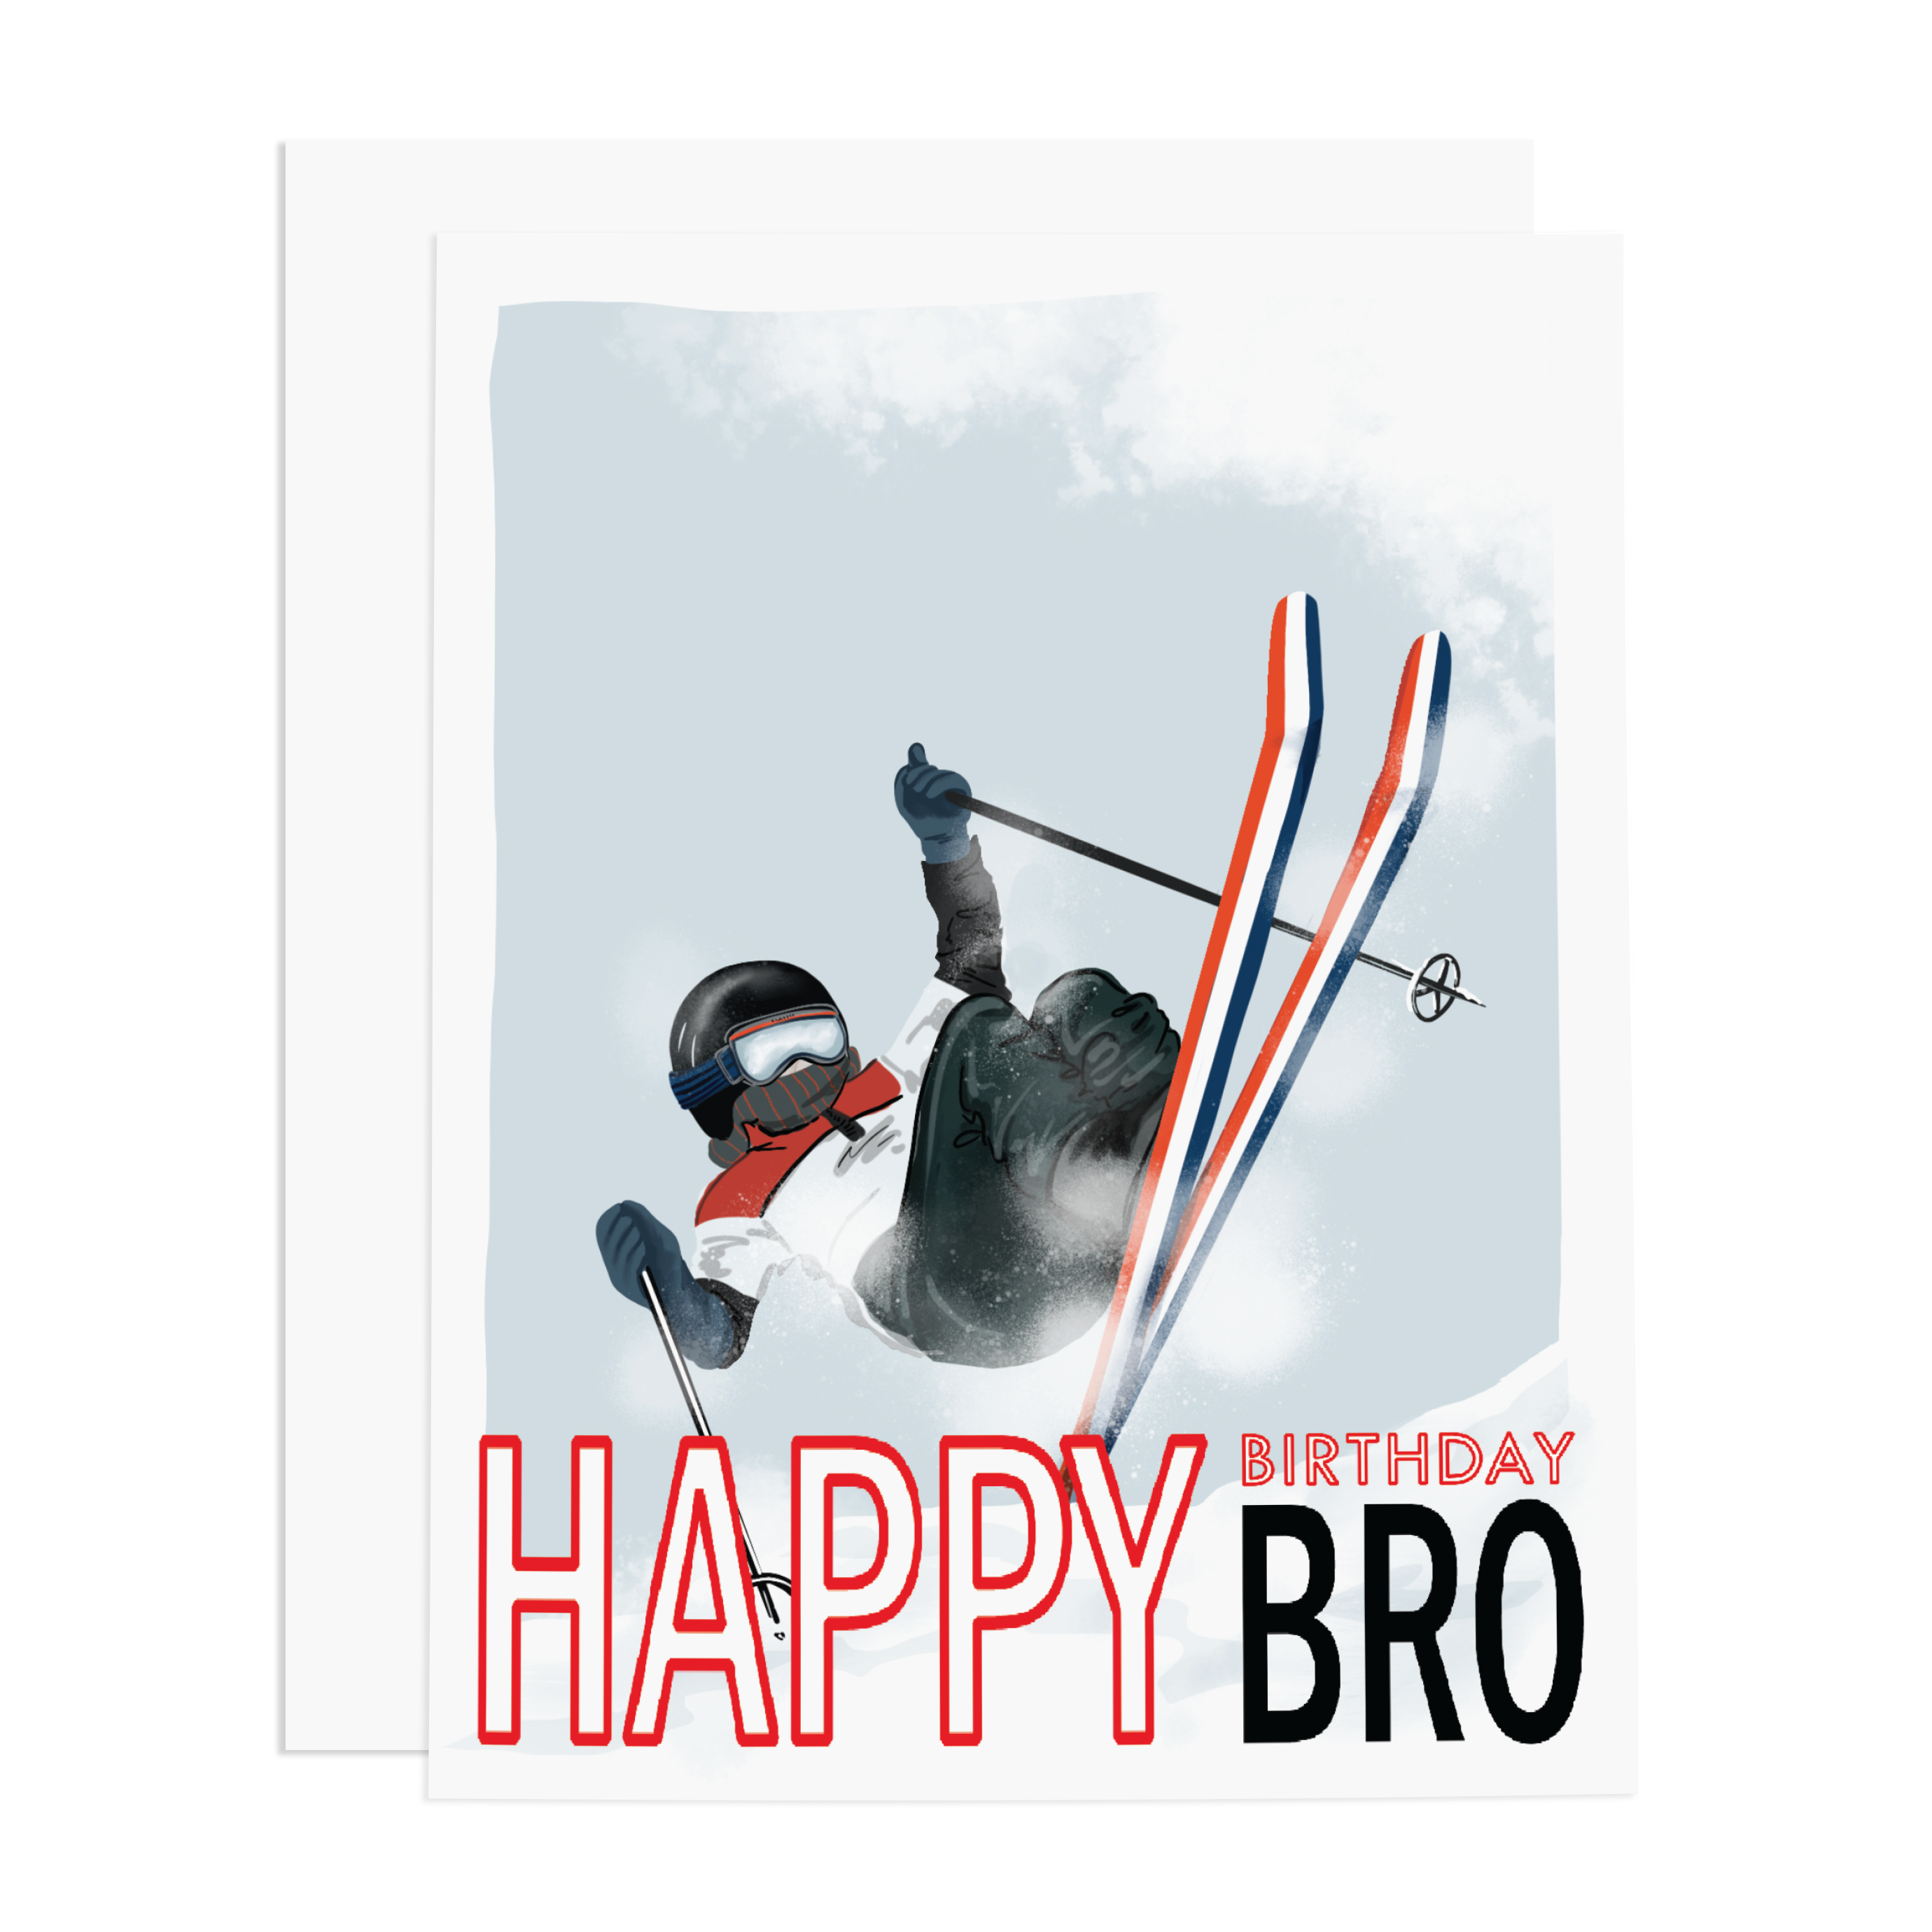 Bro Skier Birthday Card